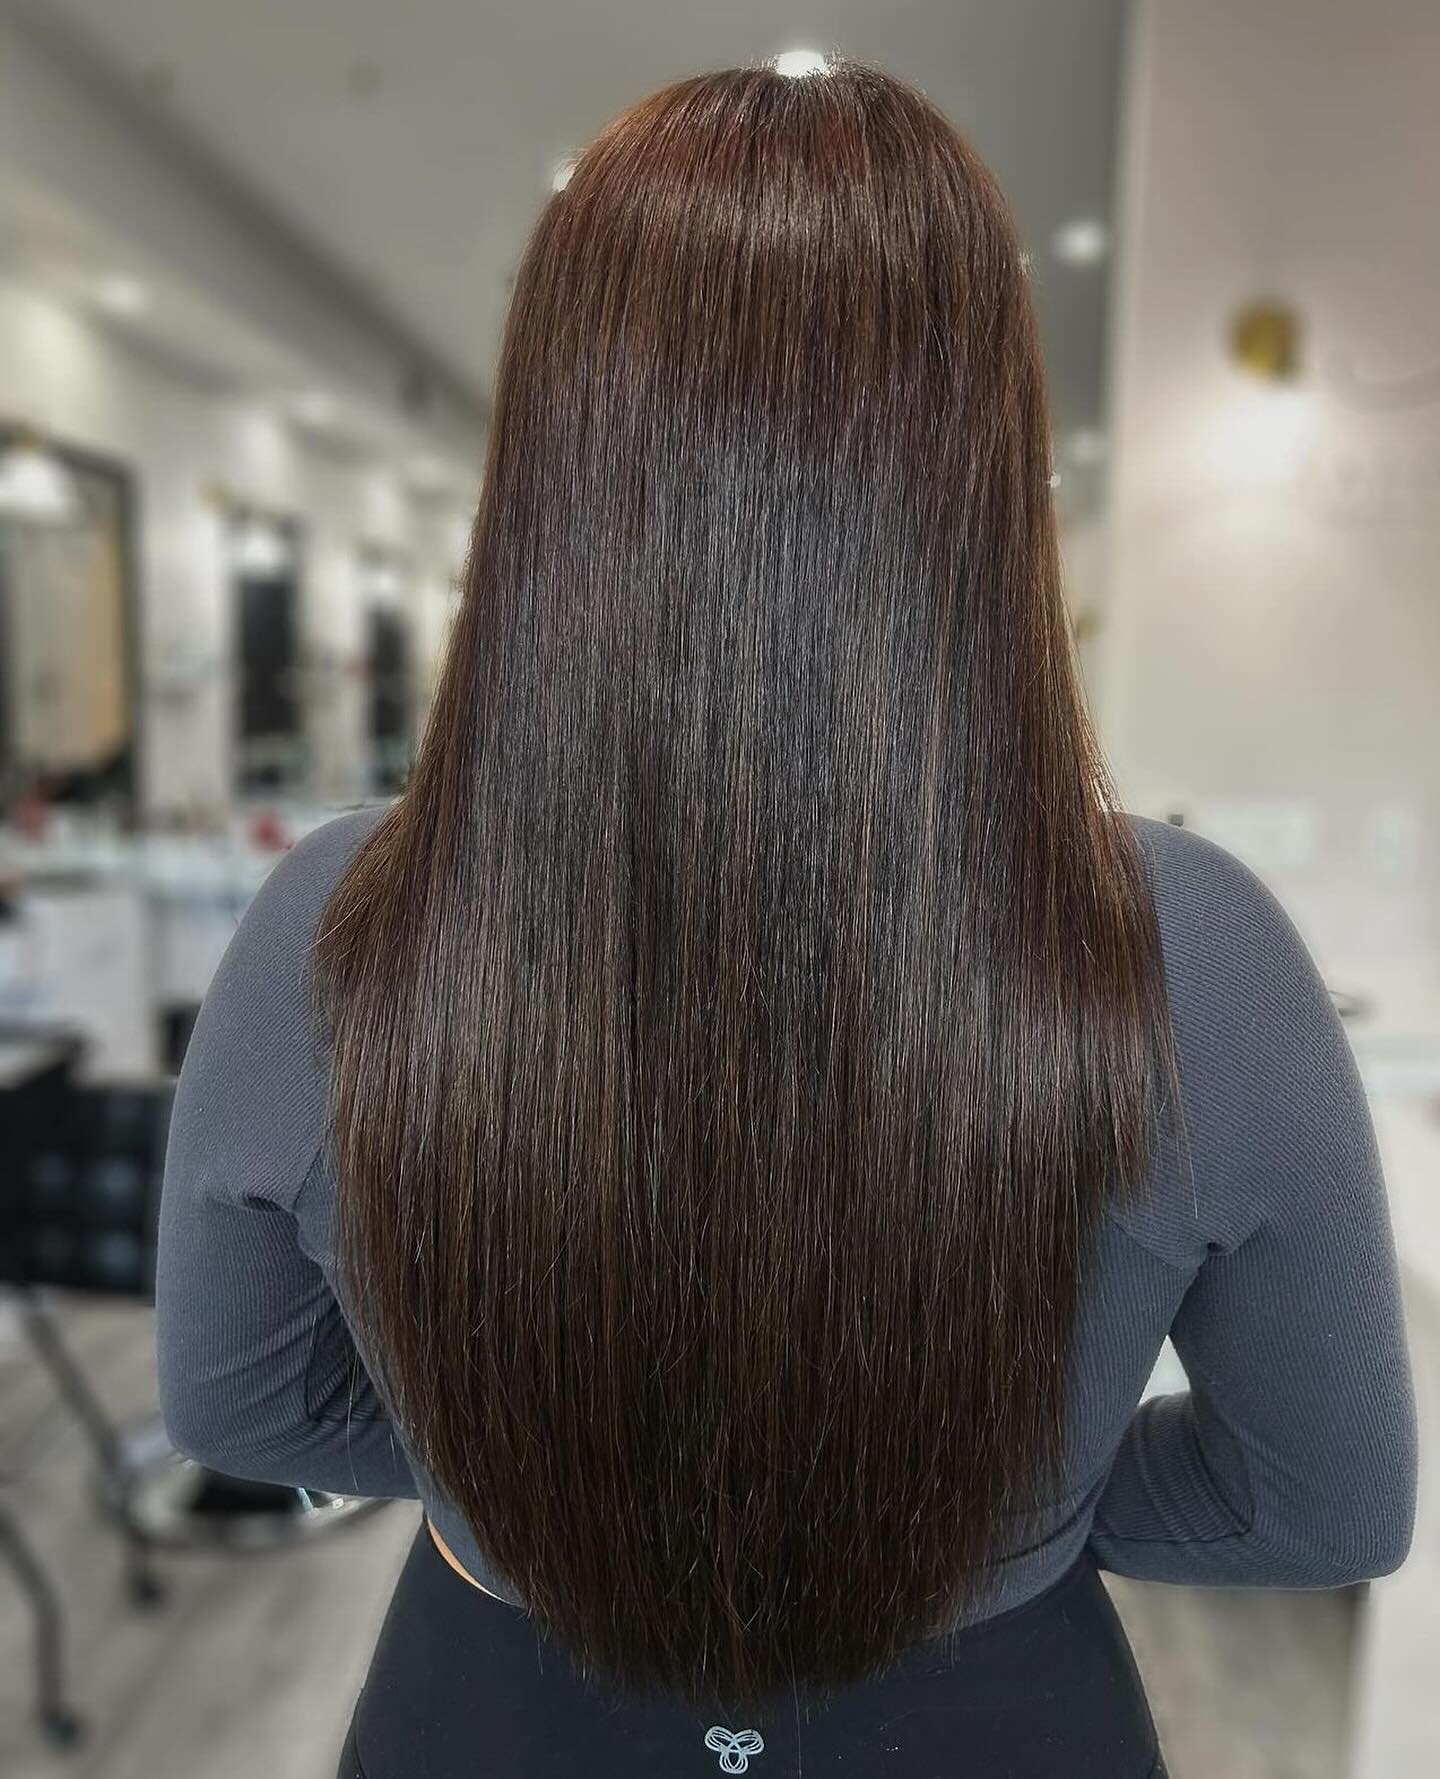 Extension transformation by @keekshair 
Cezanne smoothing service 
Full all over colour 
6 packs of @bellamihairpro I tips 

#burnabyhairsalon #burnabyhairstylist #hairextension #hairextensions #vancouverhairstylist #ʜᴀɪʀɪɴsᴘᴏ